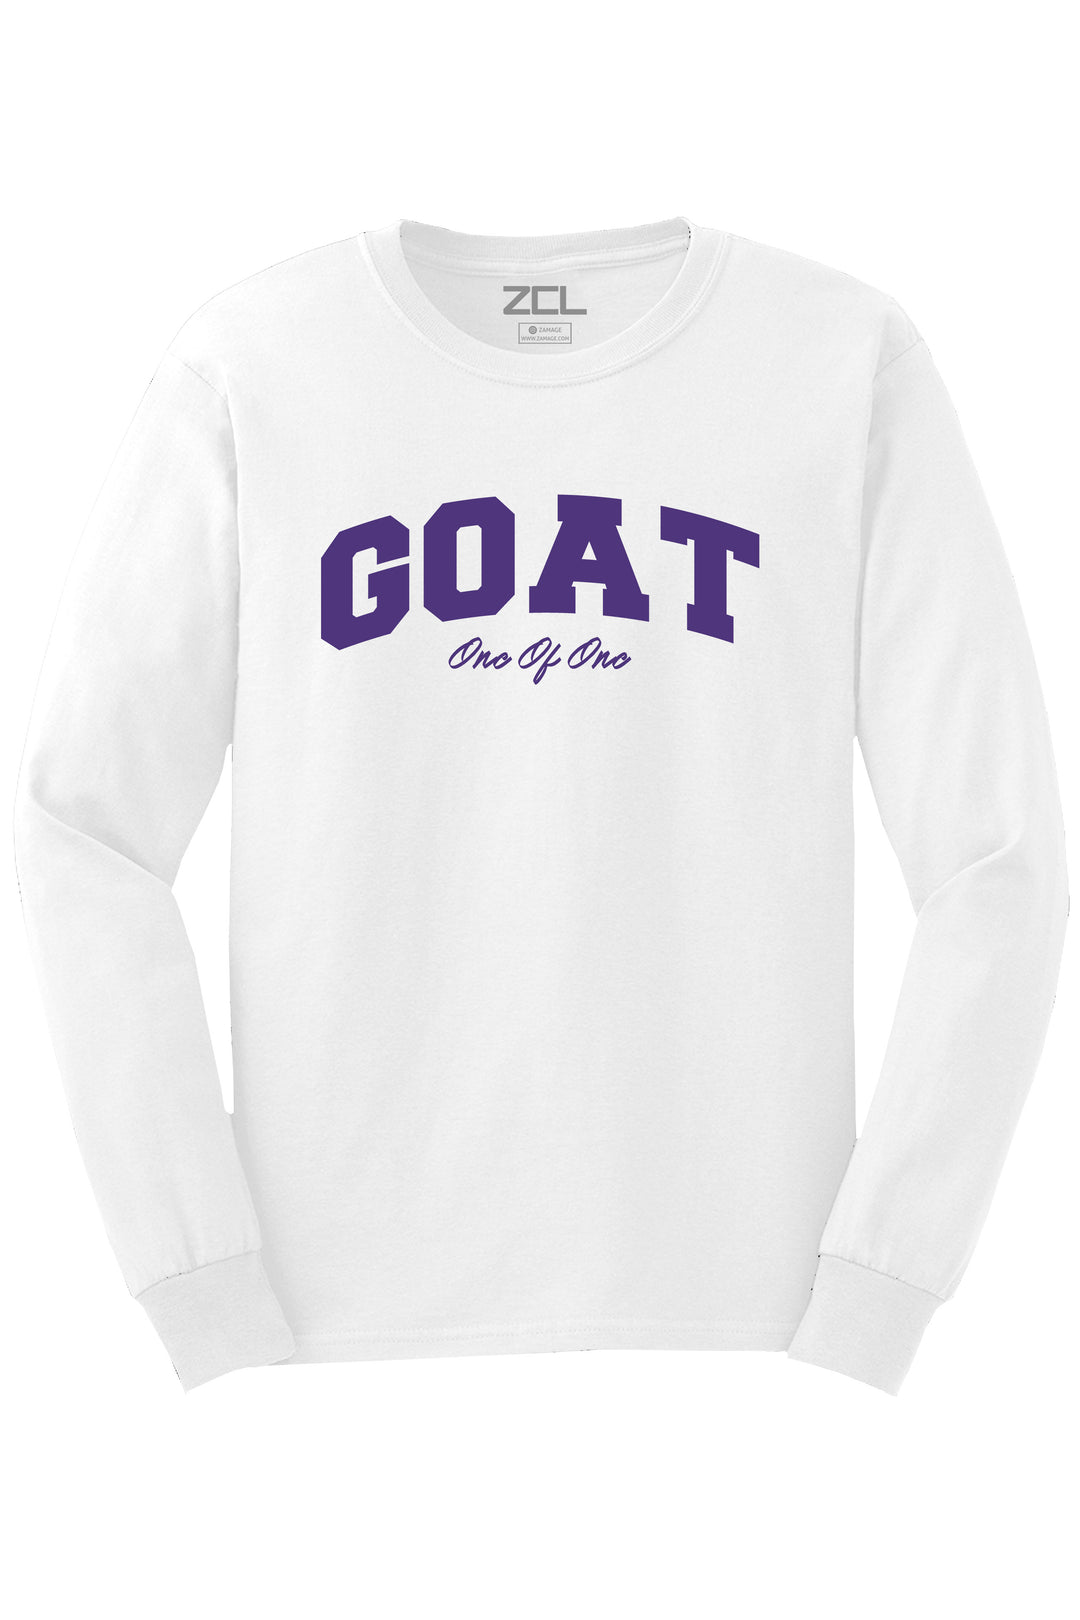 Goat Long Sleeve Tee (Purple Logo) - Zamage